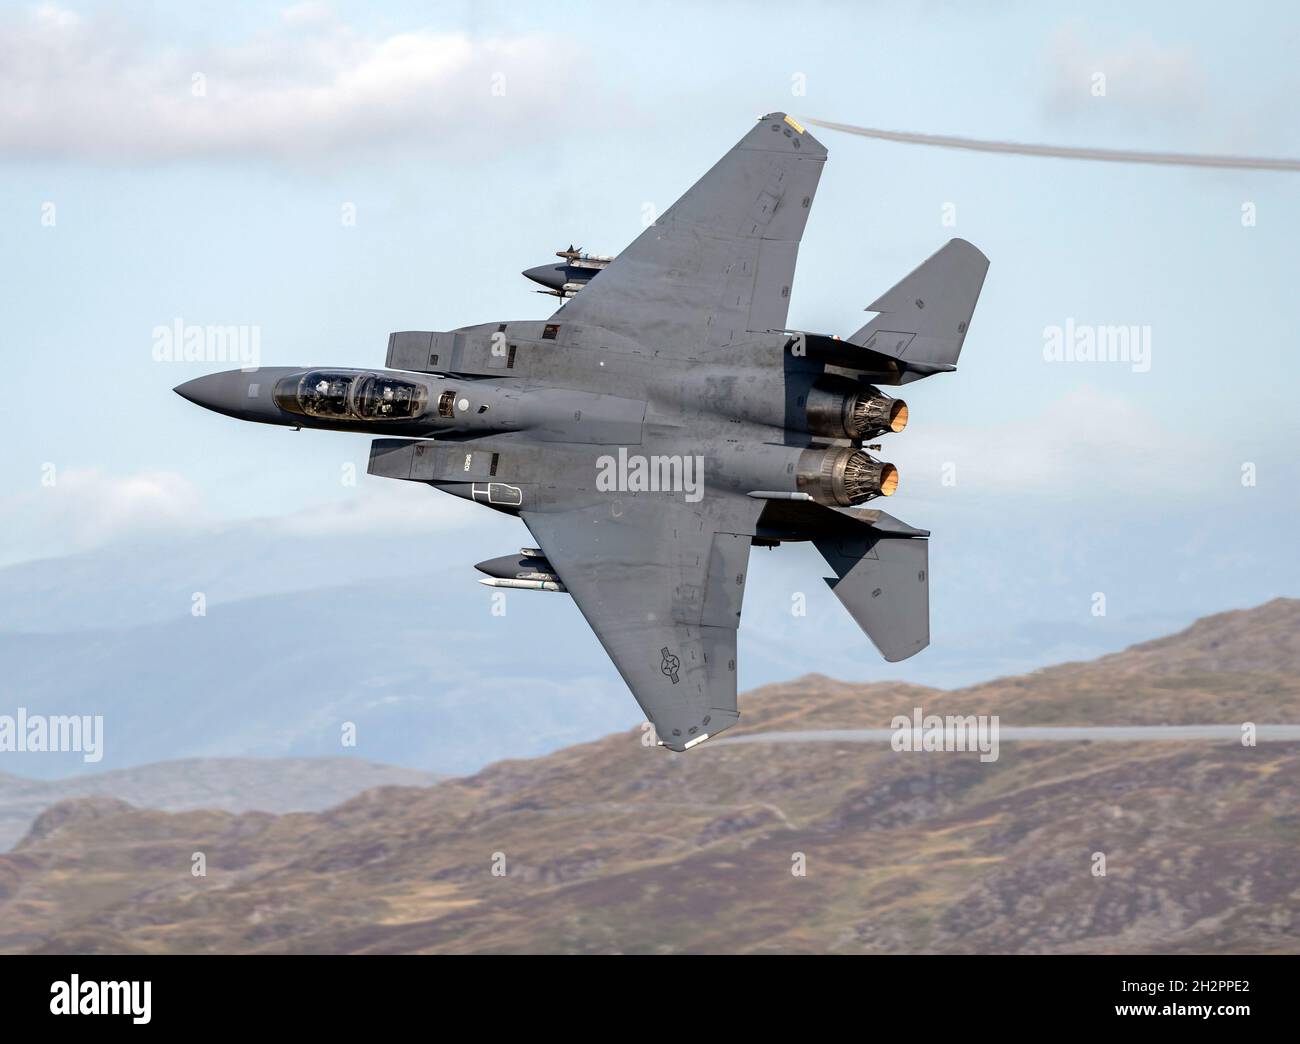 USAF F-15E Strike Eagle from RAF Lakenheathlow level flying sortie in Wales low flying area 7 (LFA7, Mach Loop) Stock Photo